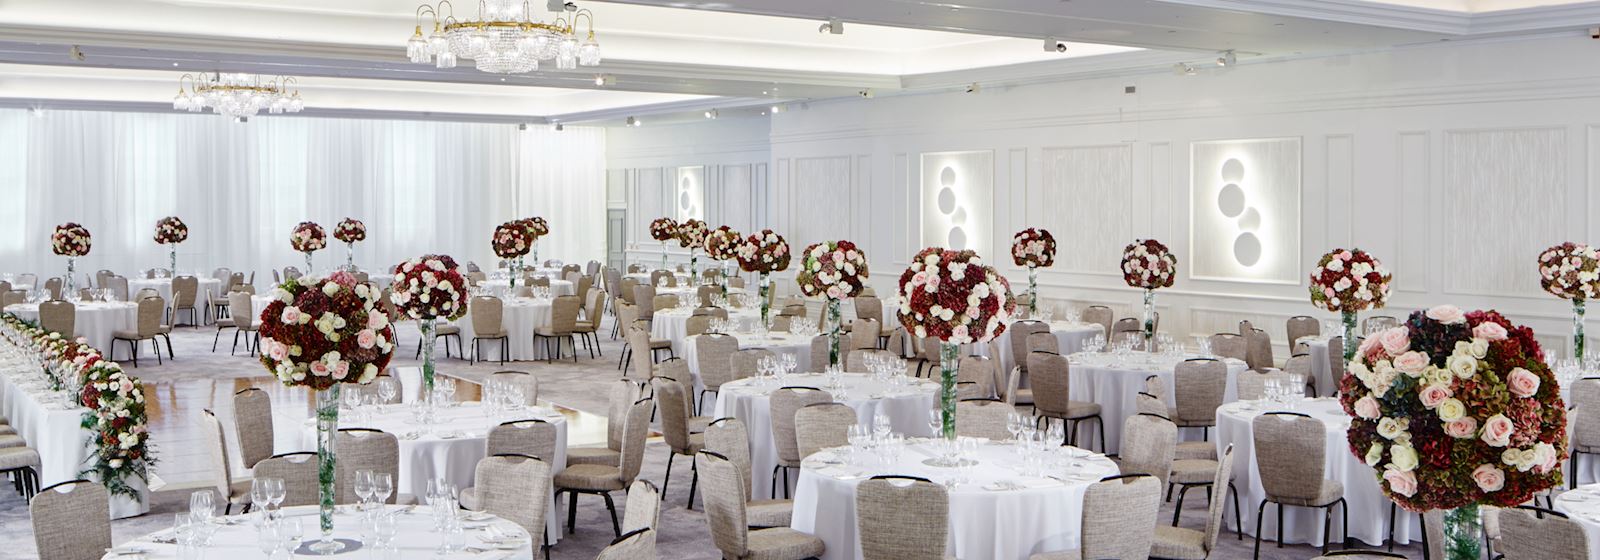 london marriott hotel grosvenor square wedding party spaces